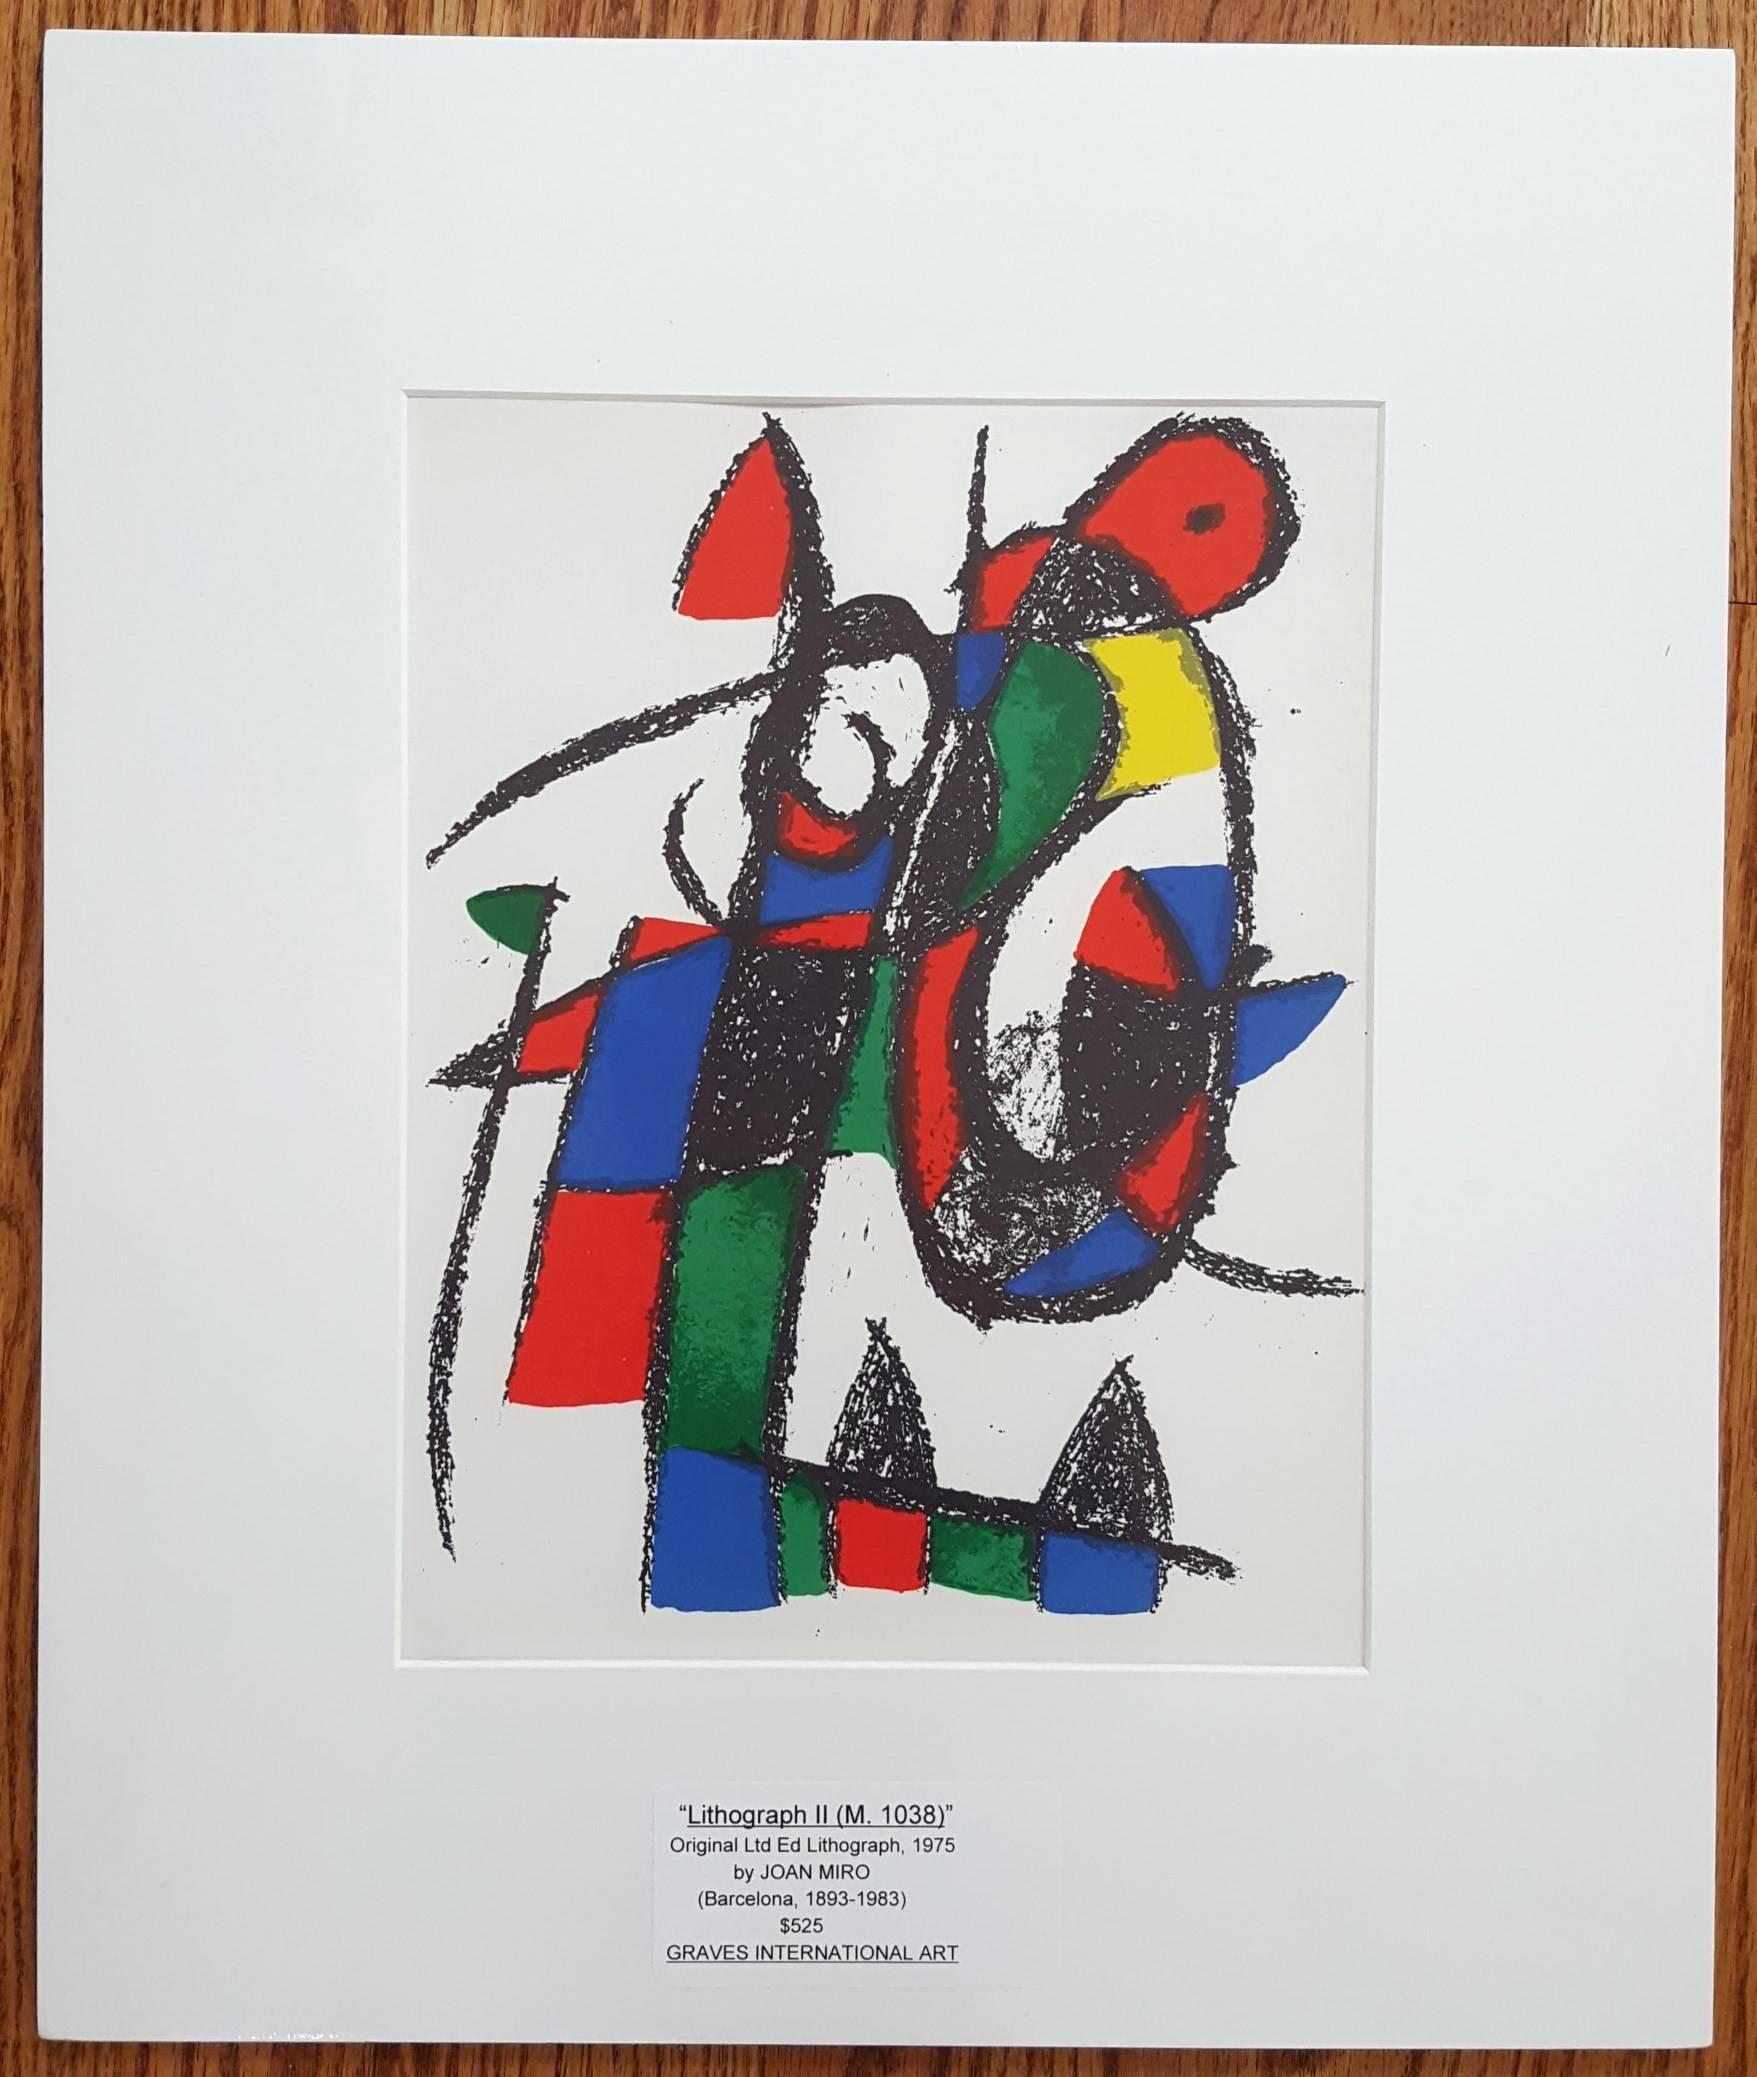 Lithographe II: Untitled (M. 1038) - Print by Joan Miró